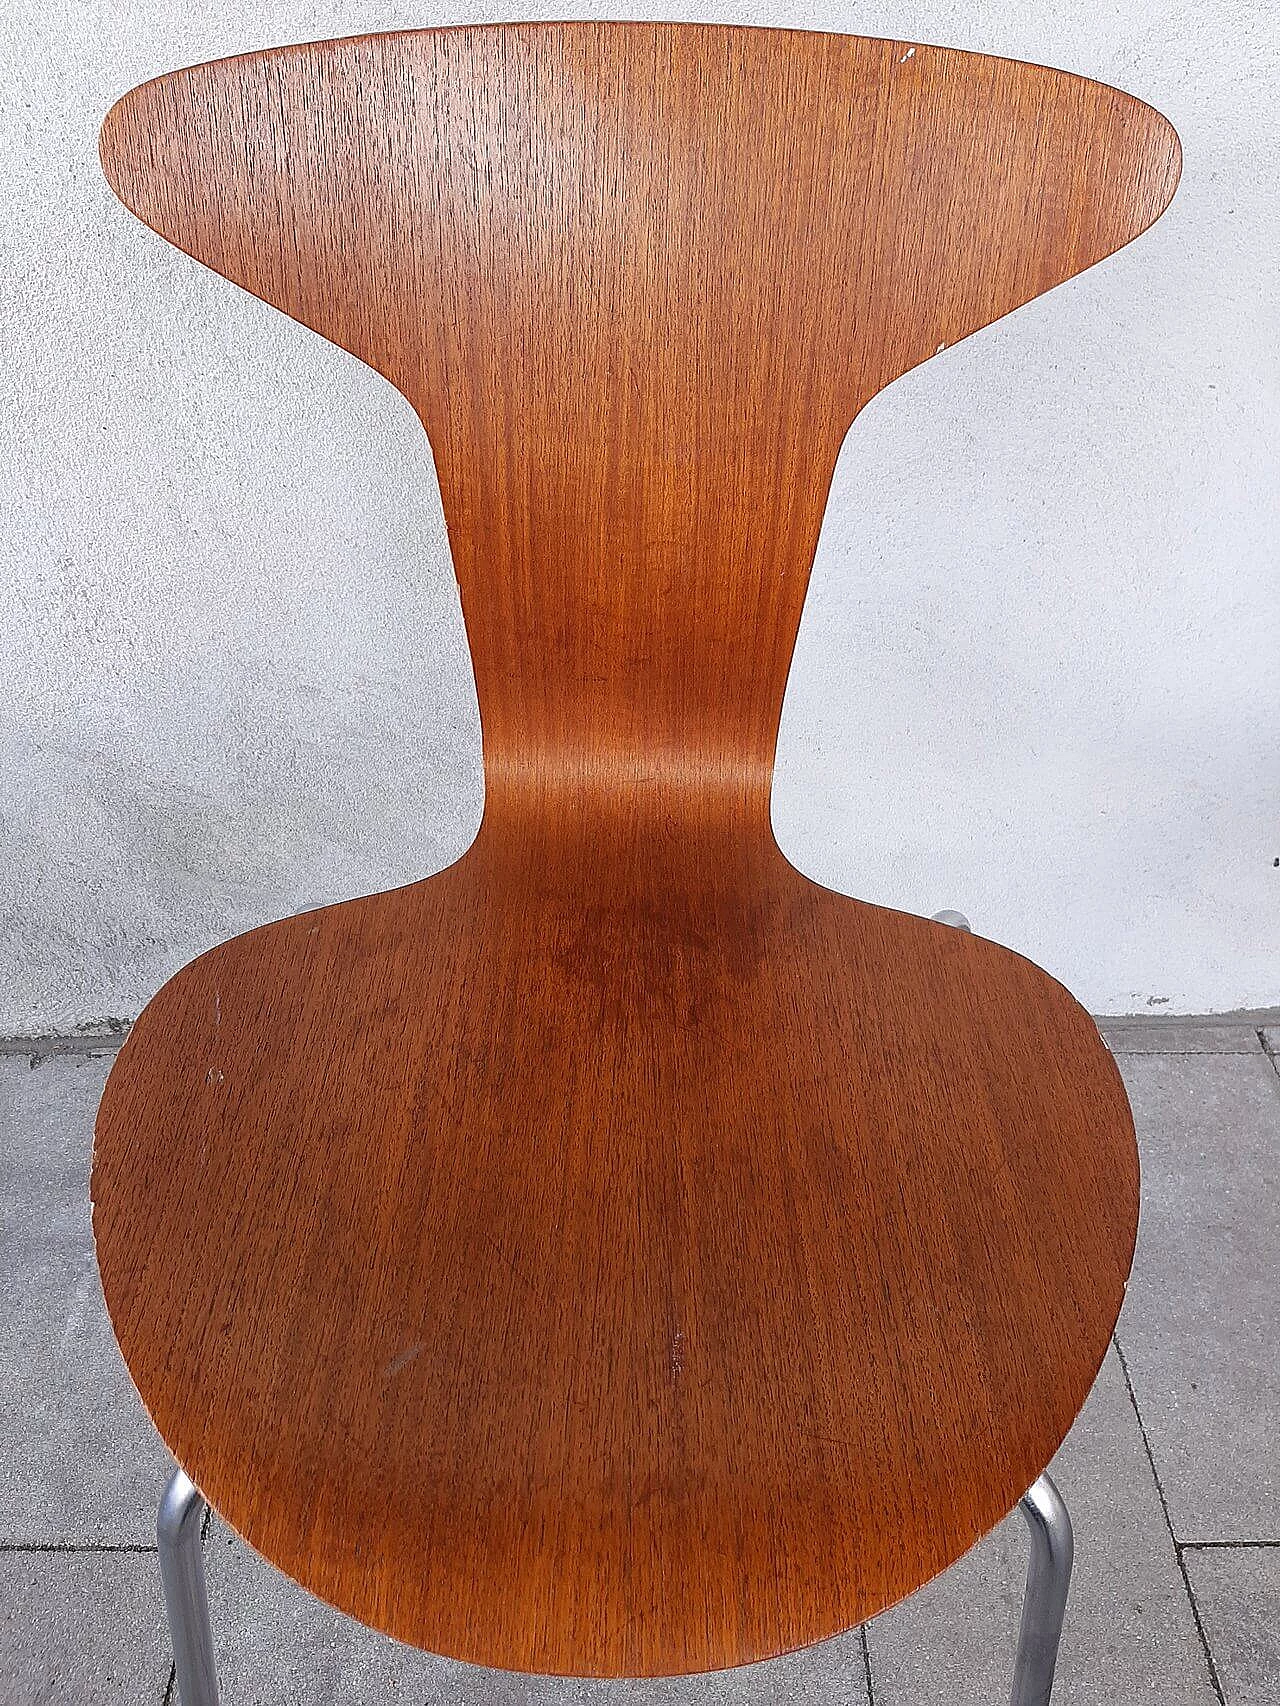 6 Chairs 3105 by Arne Jacobsen for Fritz Hansen, 1967 20